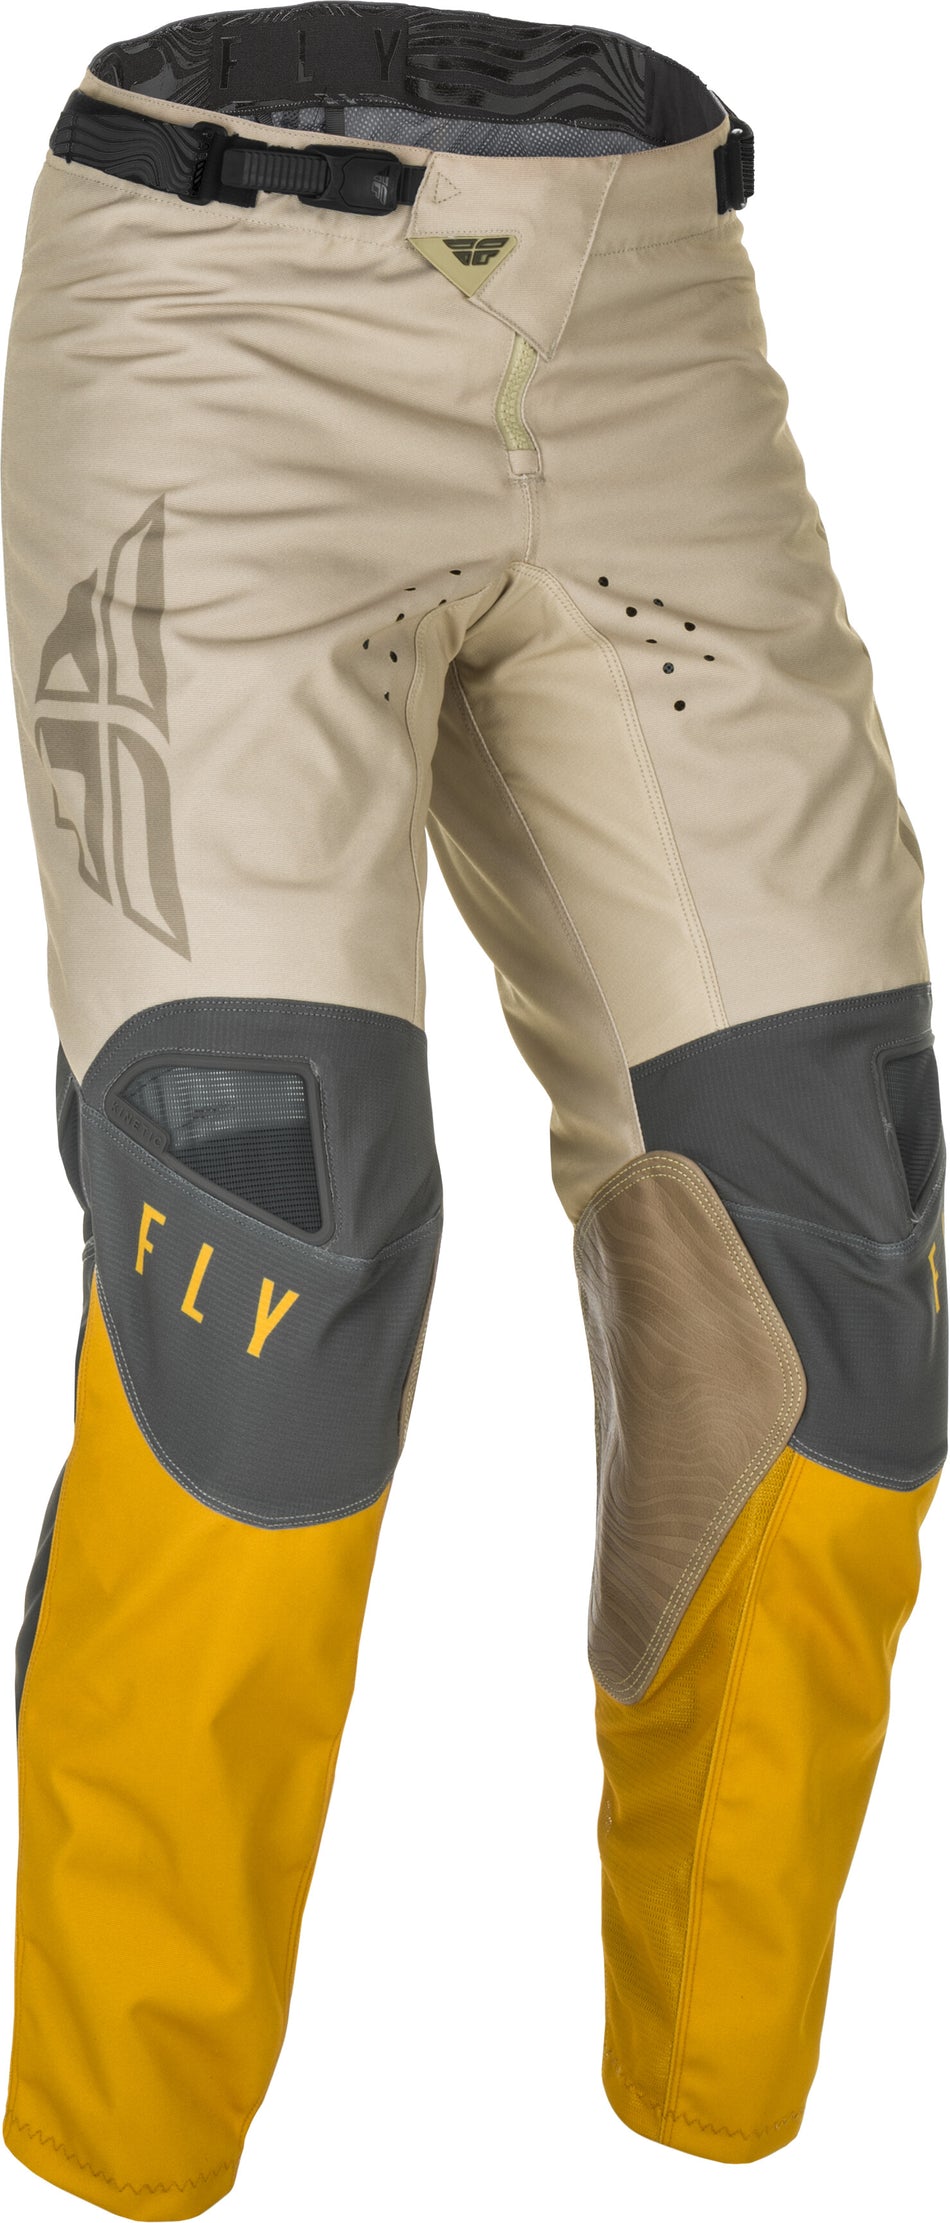 FLY RACING Kinetic K121 Pants Mustard/Stone/Grey Sz 30 374-43330